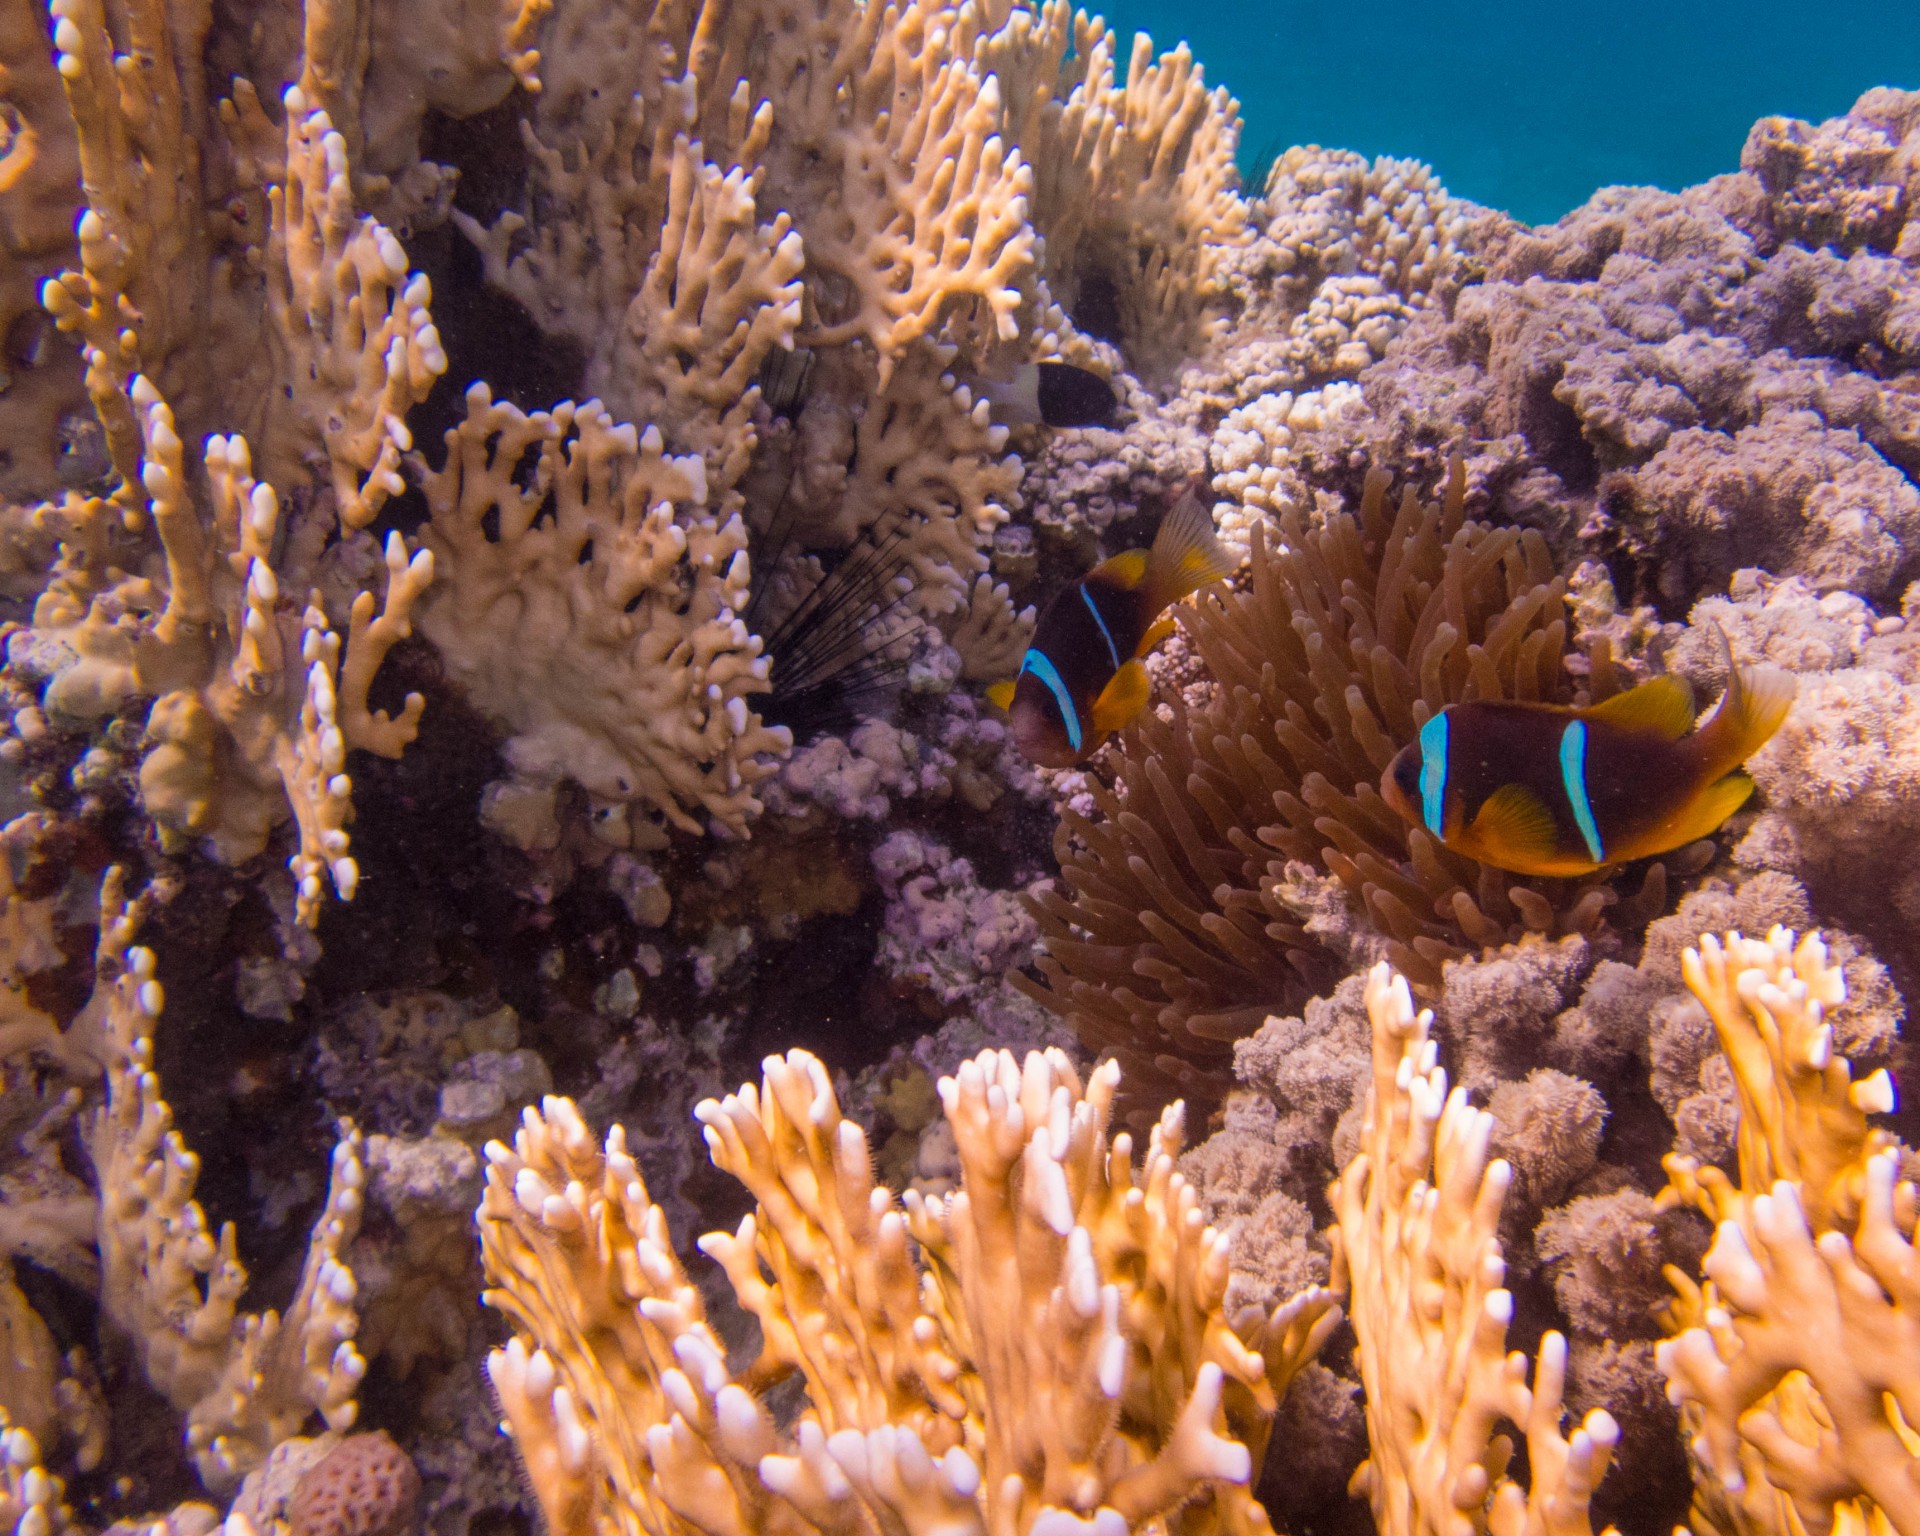 Nemo amidst coral in the Red Sea.